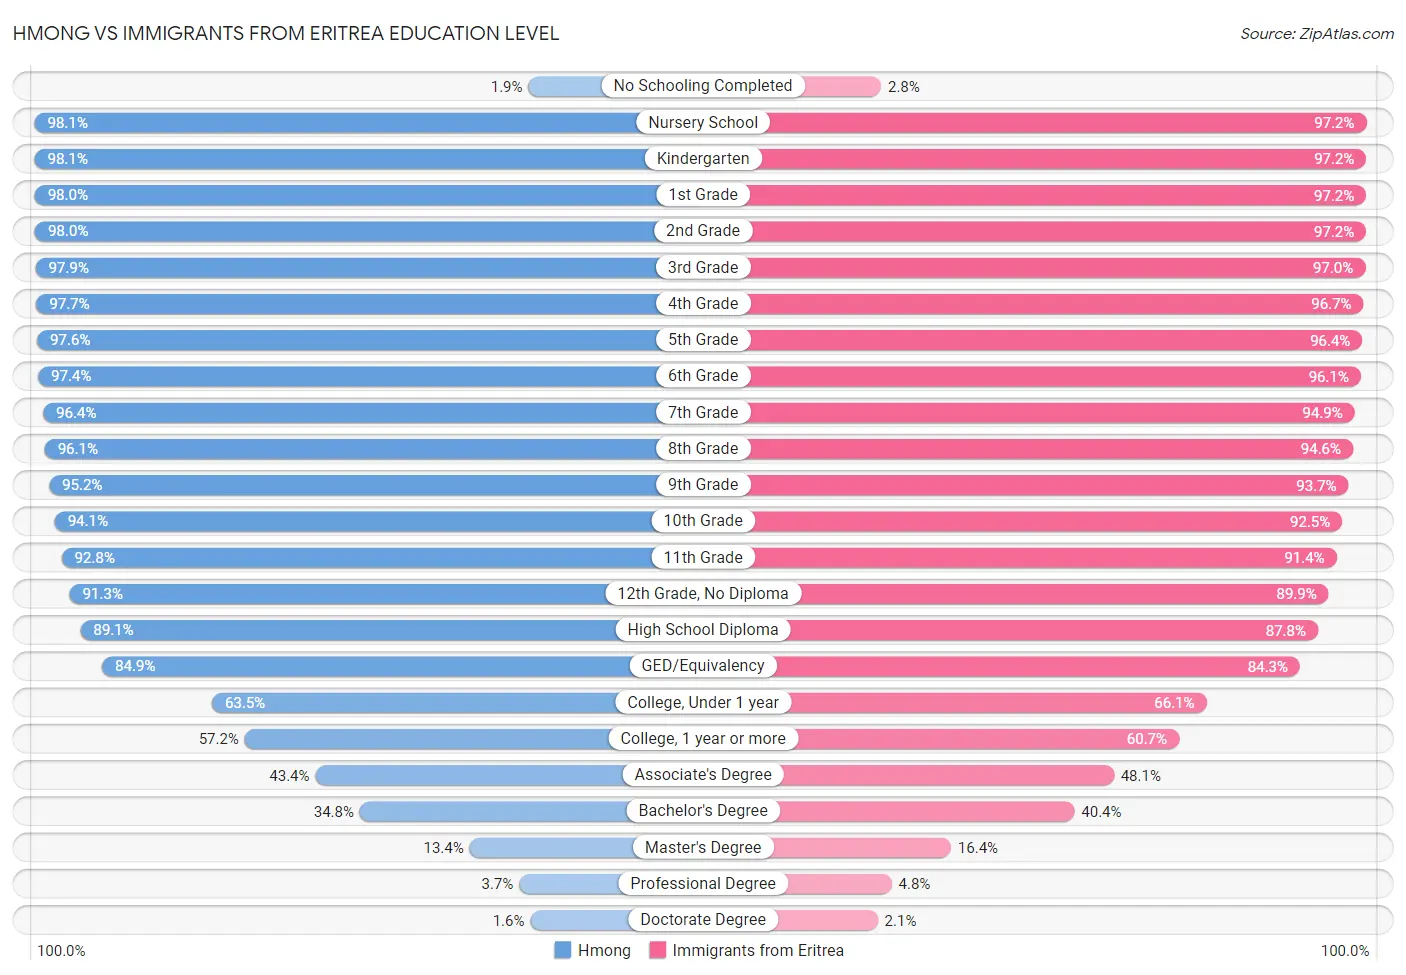 Hmong vs Immigrants from Eritrea Education Level